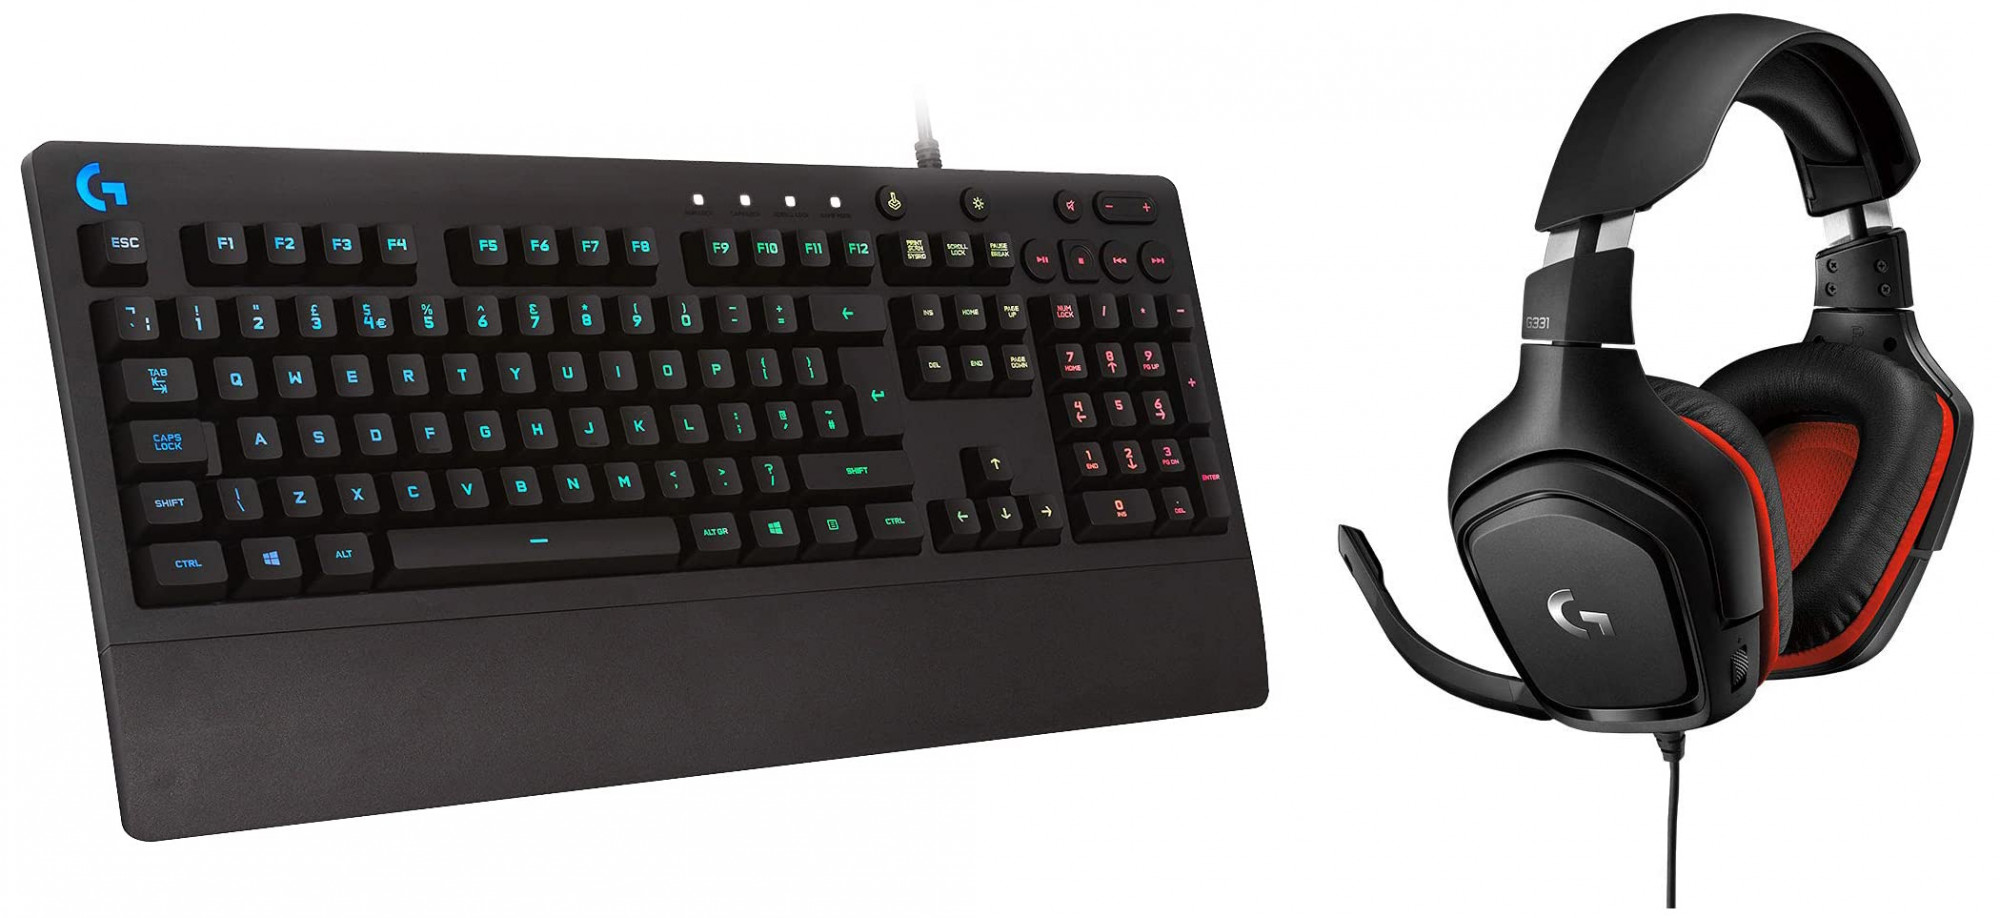  Logitech G213 Prodigy Gaming Keyboard, LIGHTSYNC RGB